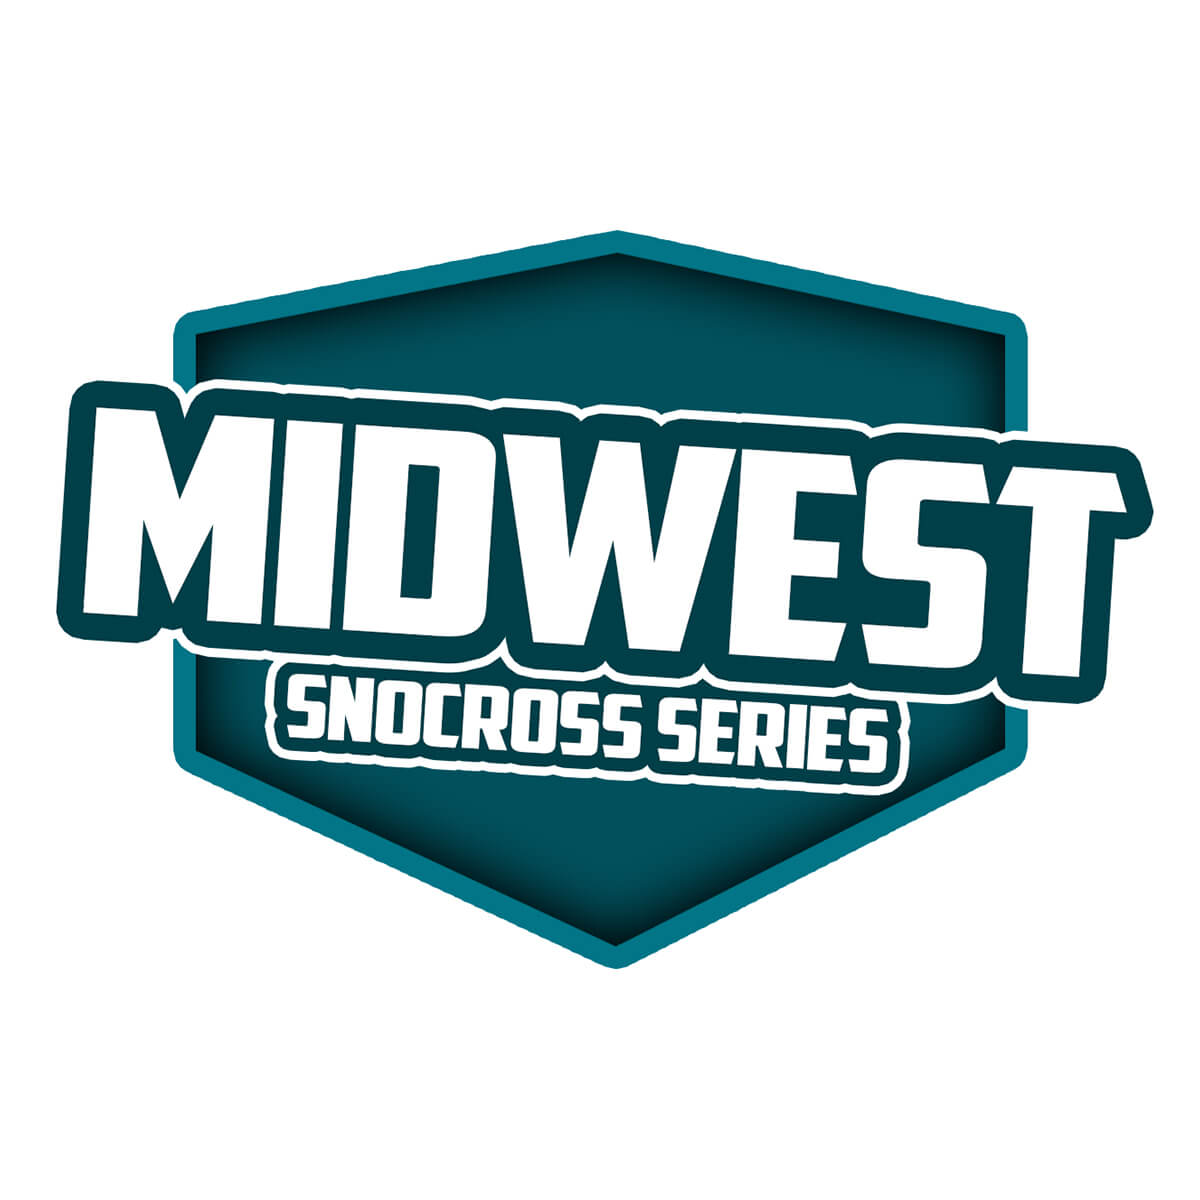 Midwest Snocross Series logo